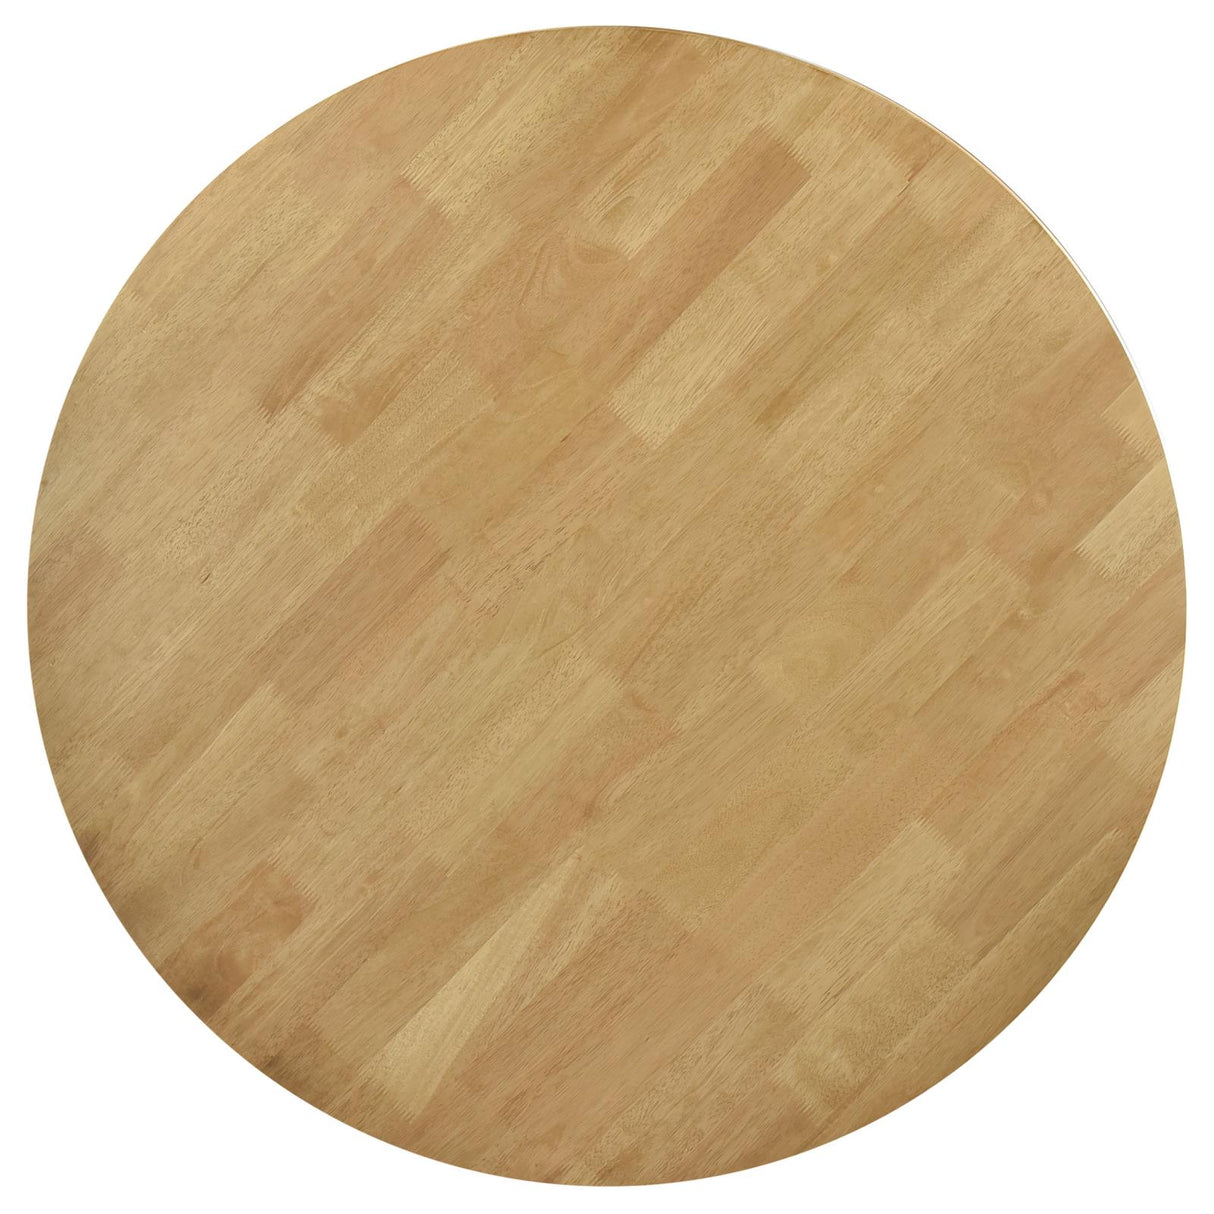 Elowen Round Solid Wood Dining Table Light Walnut - 108440 - Luna Furniture